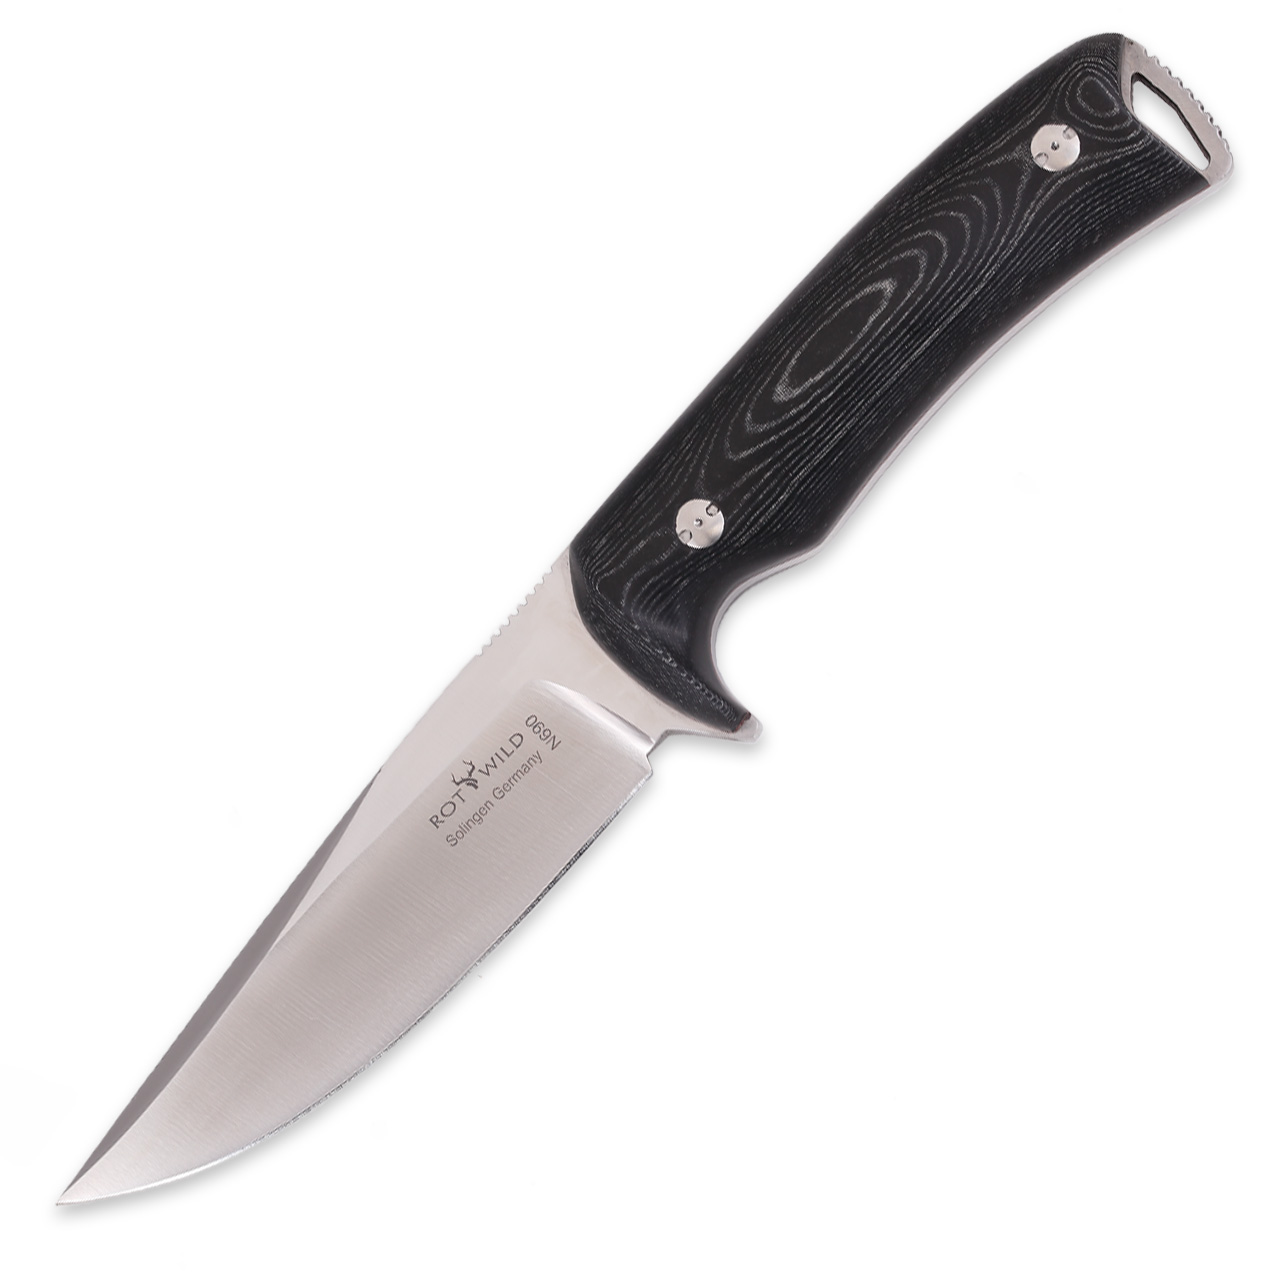 Hunting knife "Habicht" micarta black